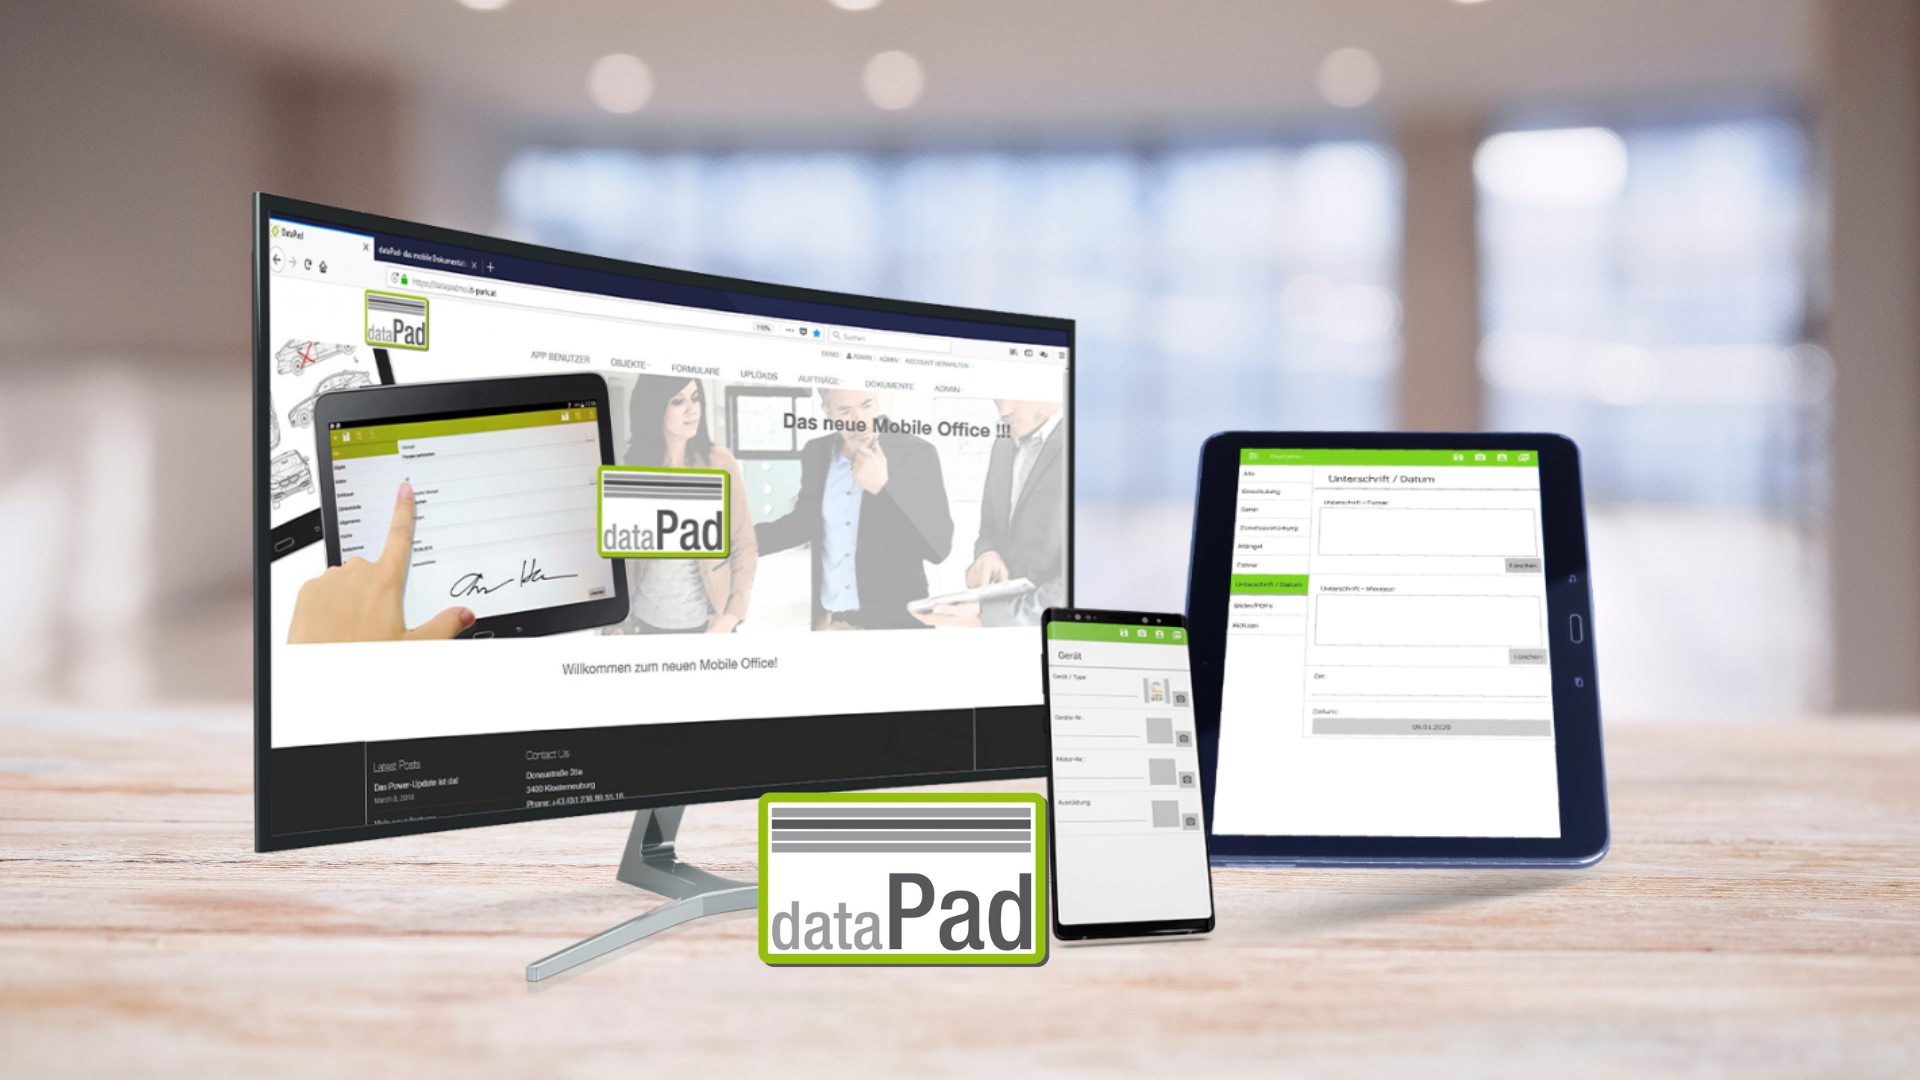 dataPad Mobile Office App